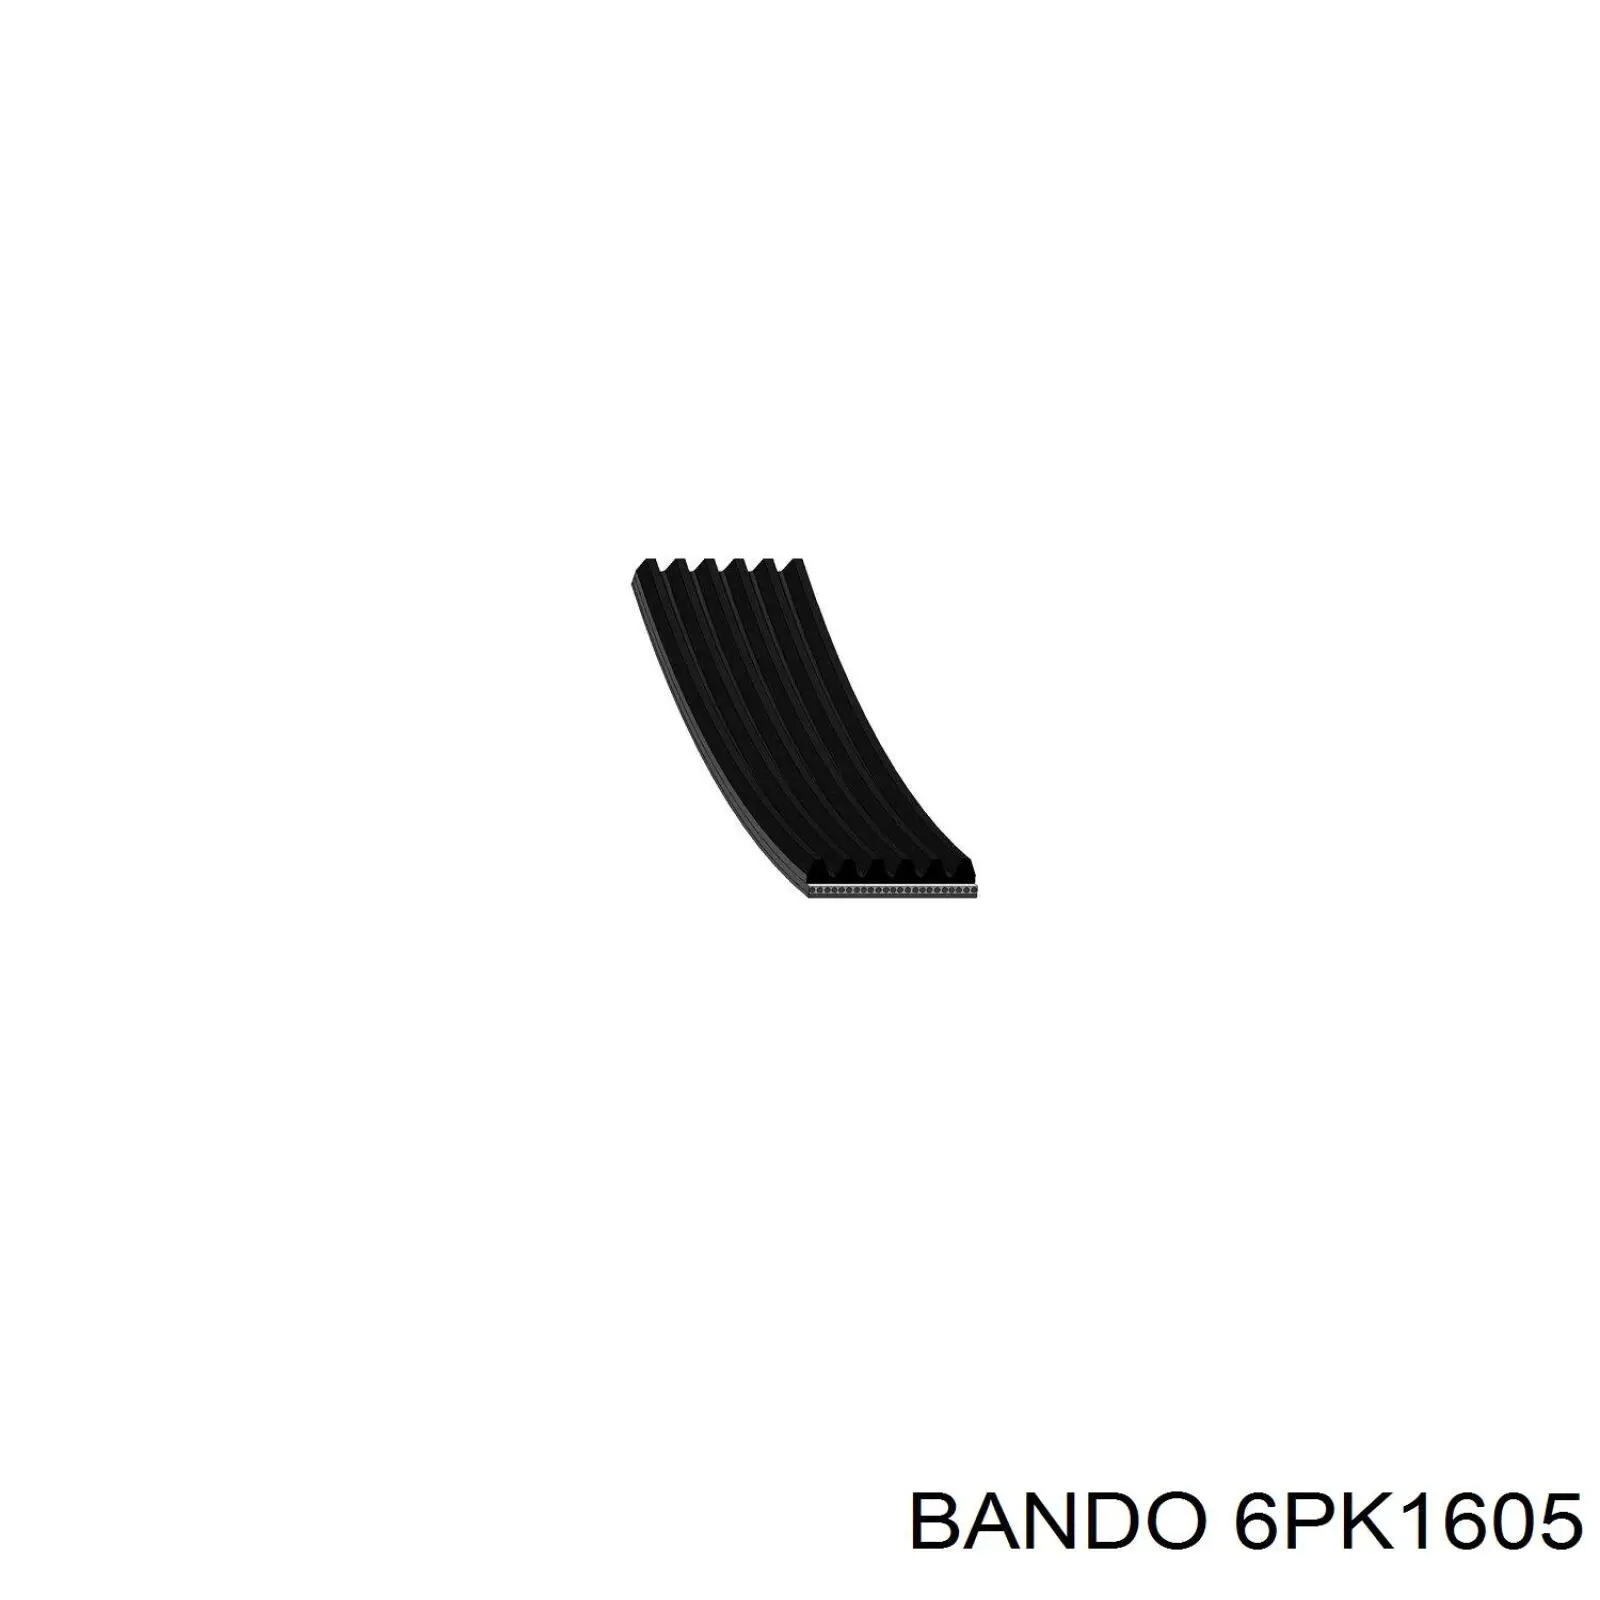 6PK1605 Bando correa trapezoidal